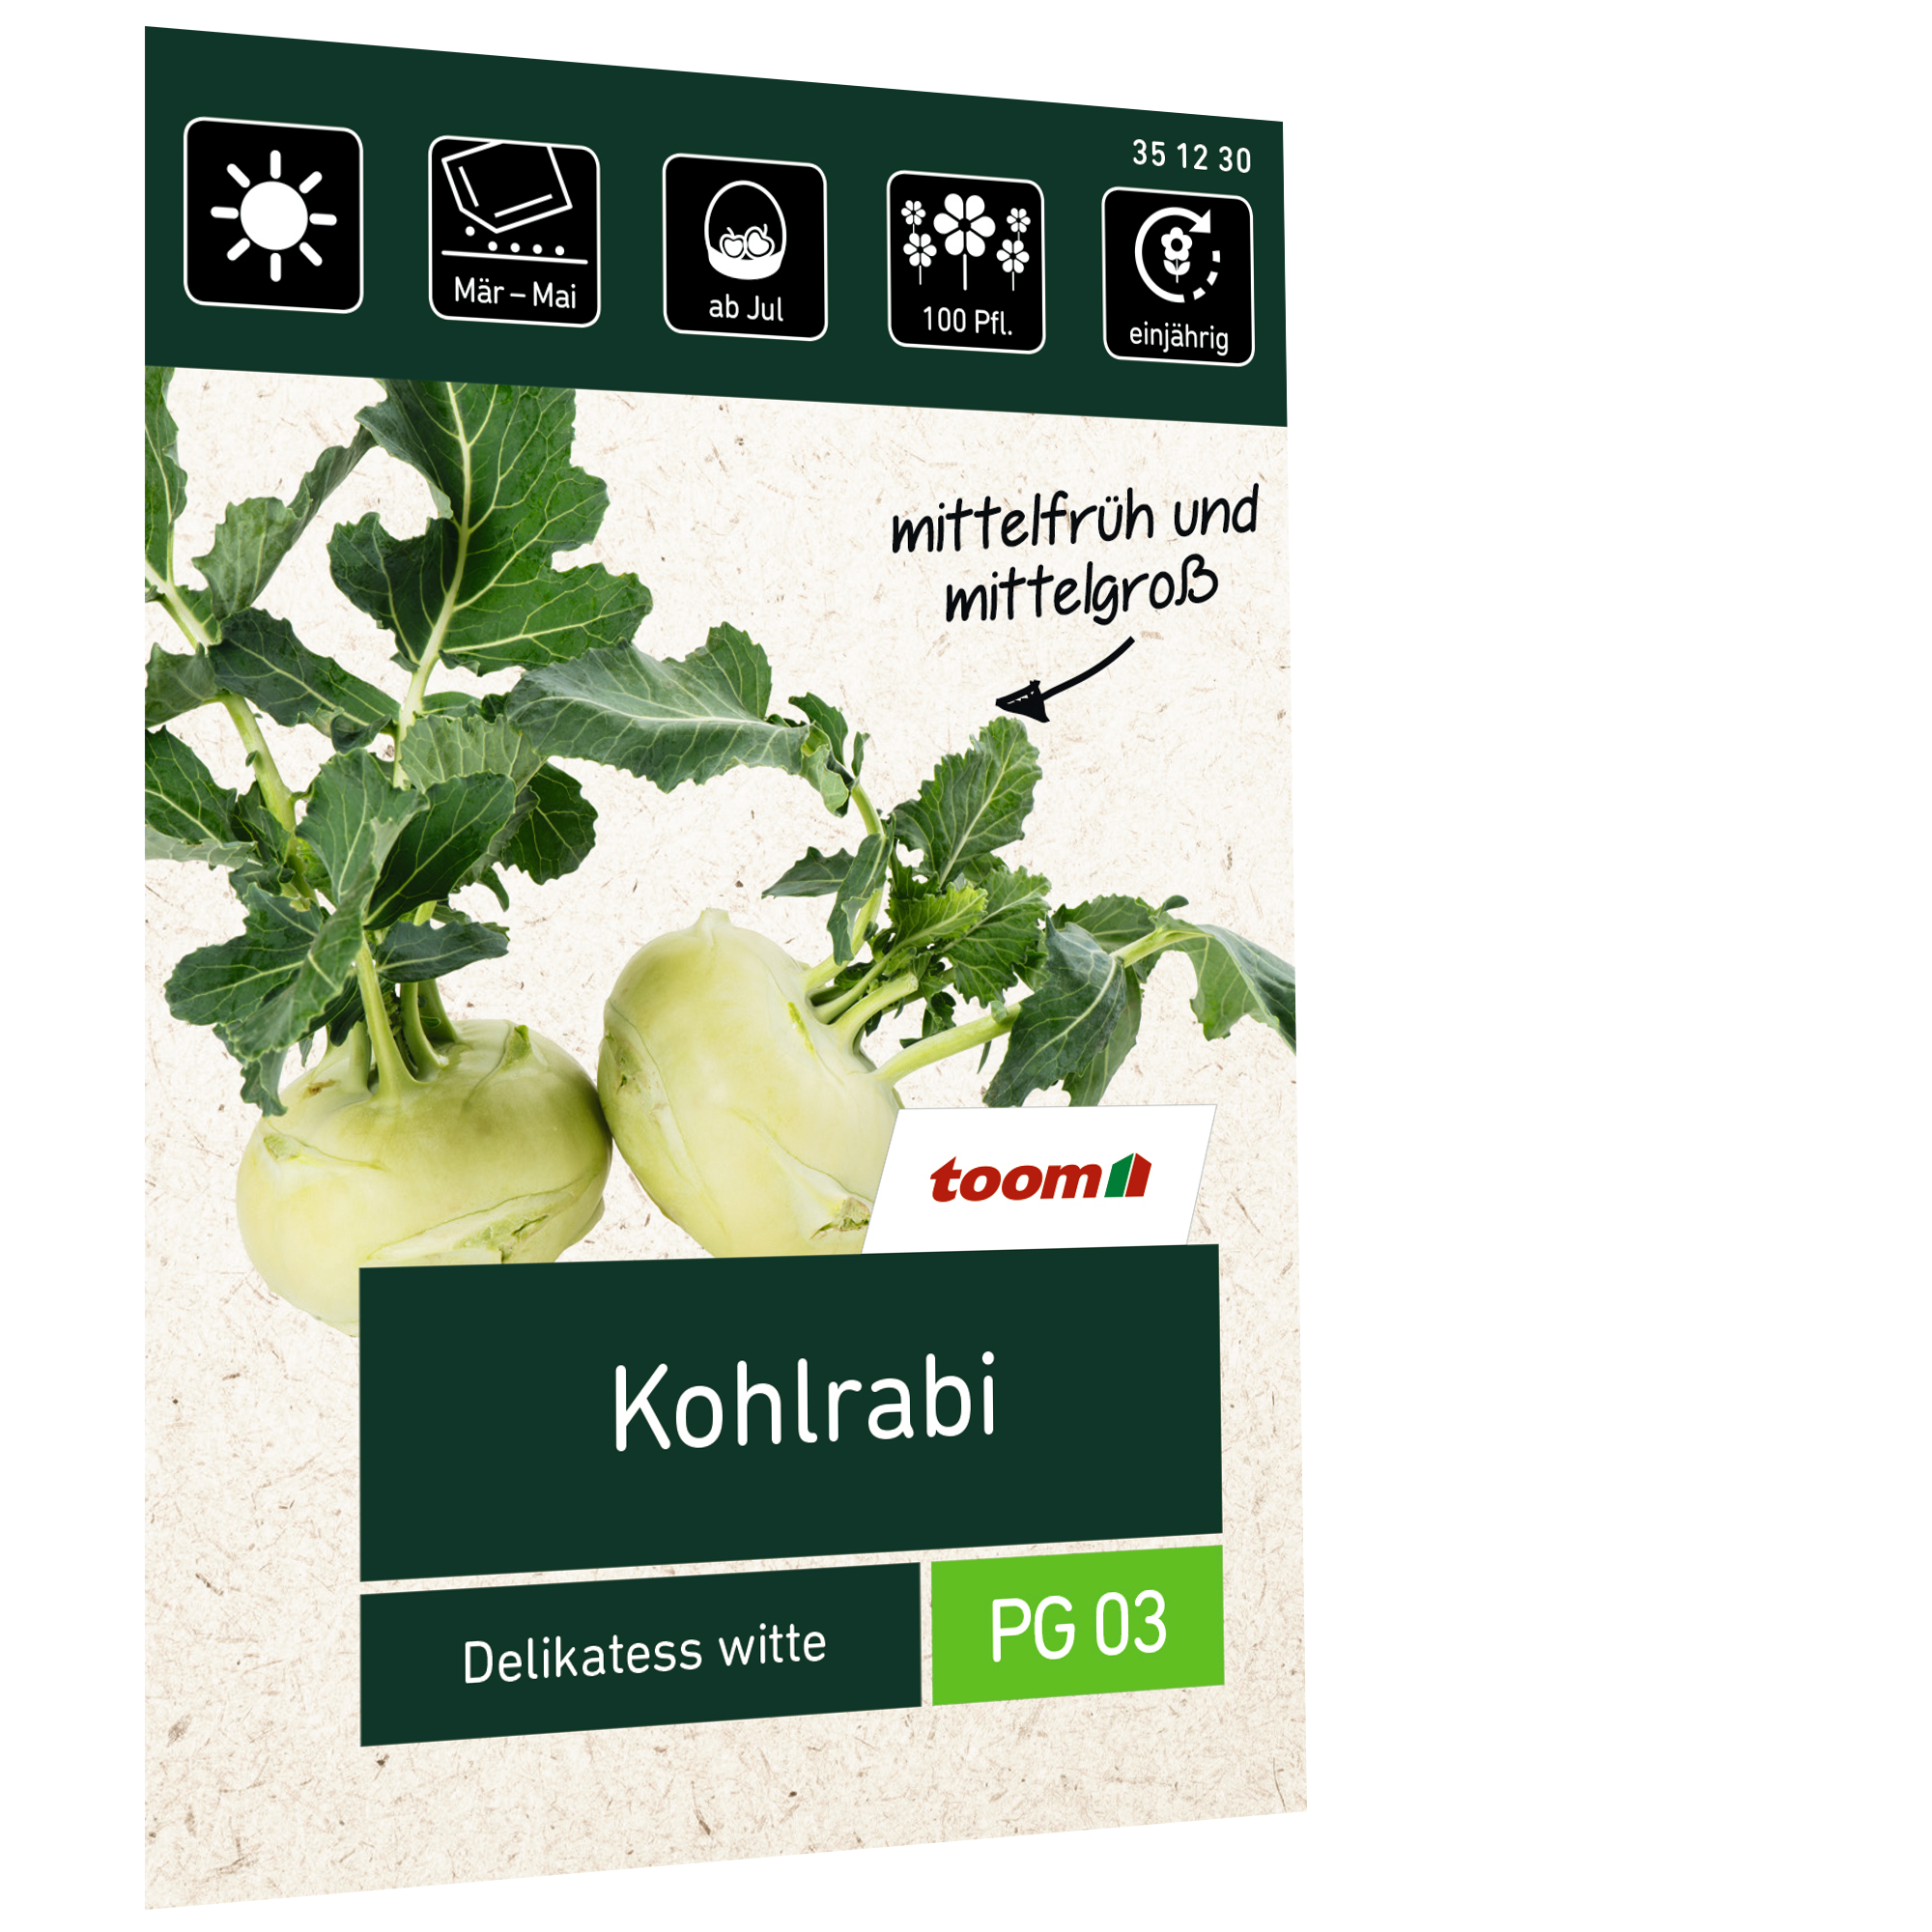 Kohlrabi 'Delikatess witte' + product picture